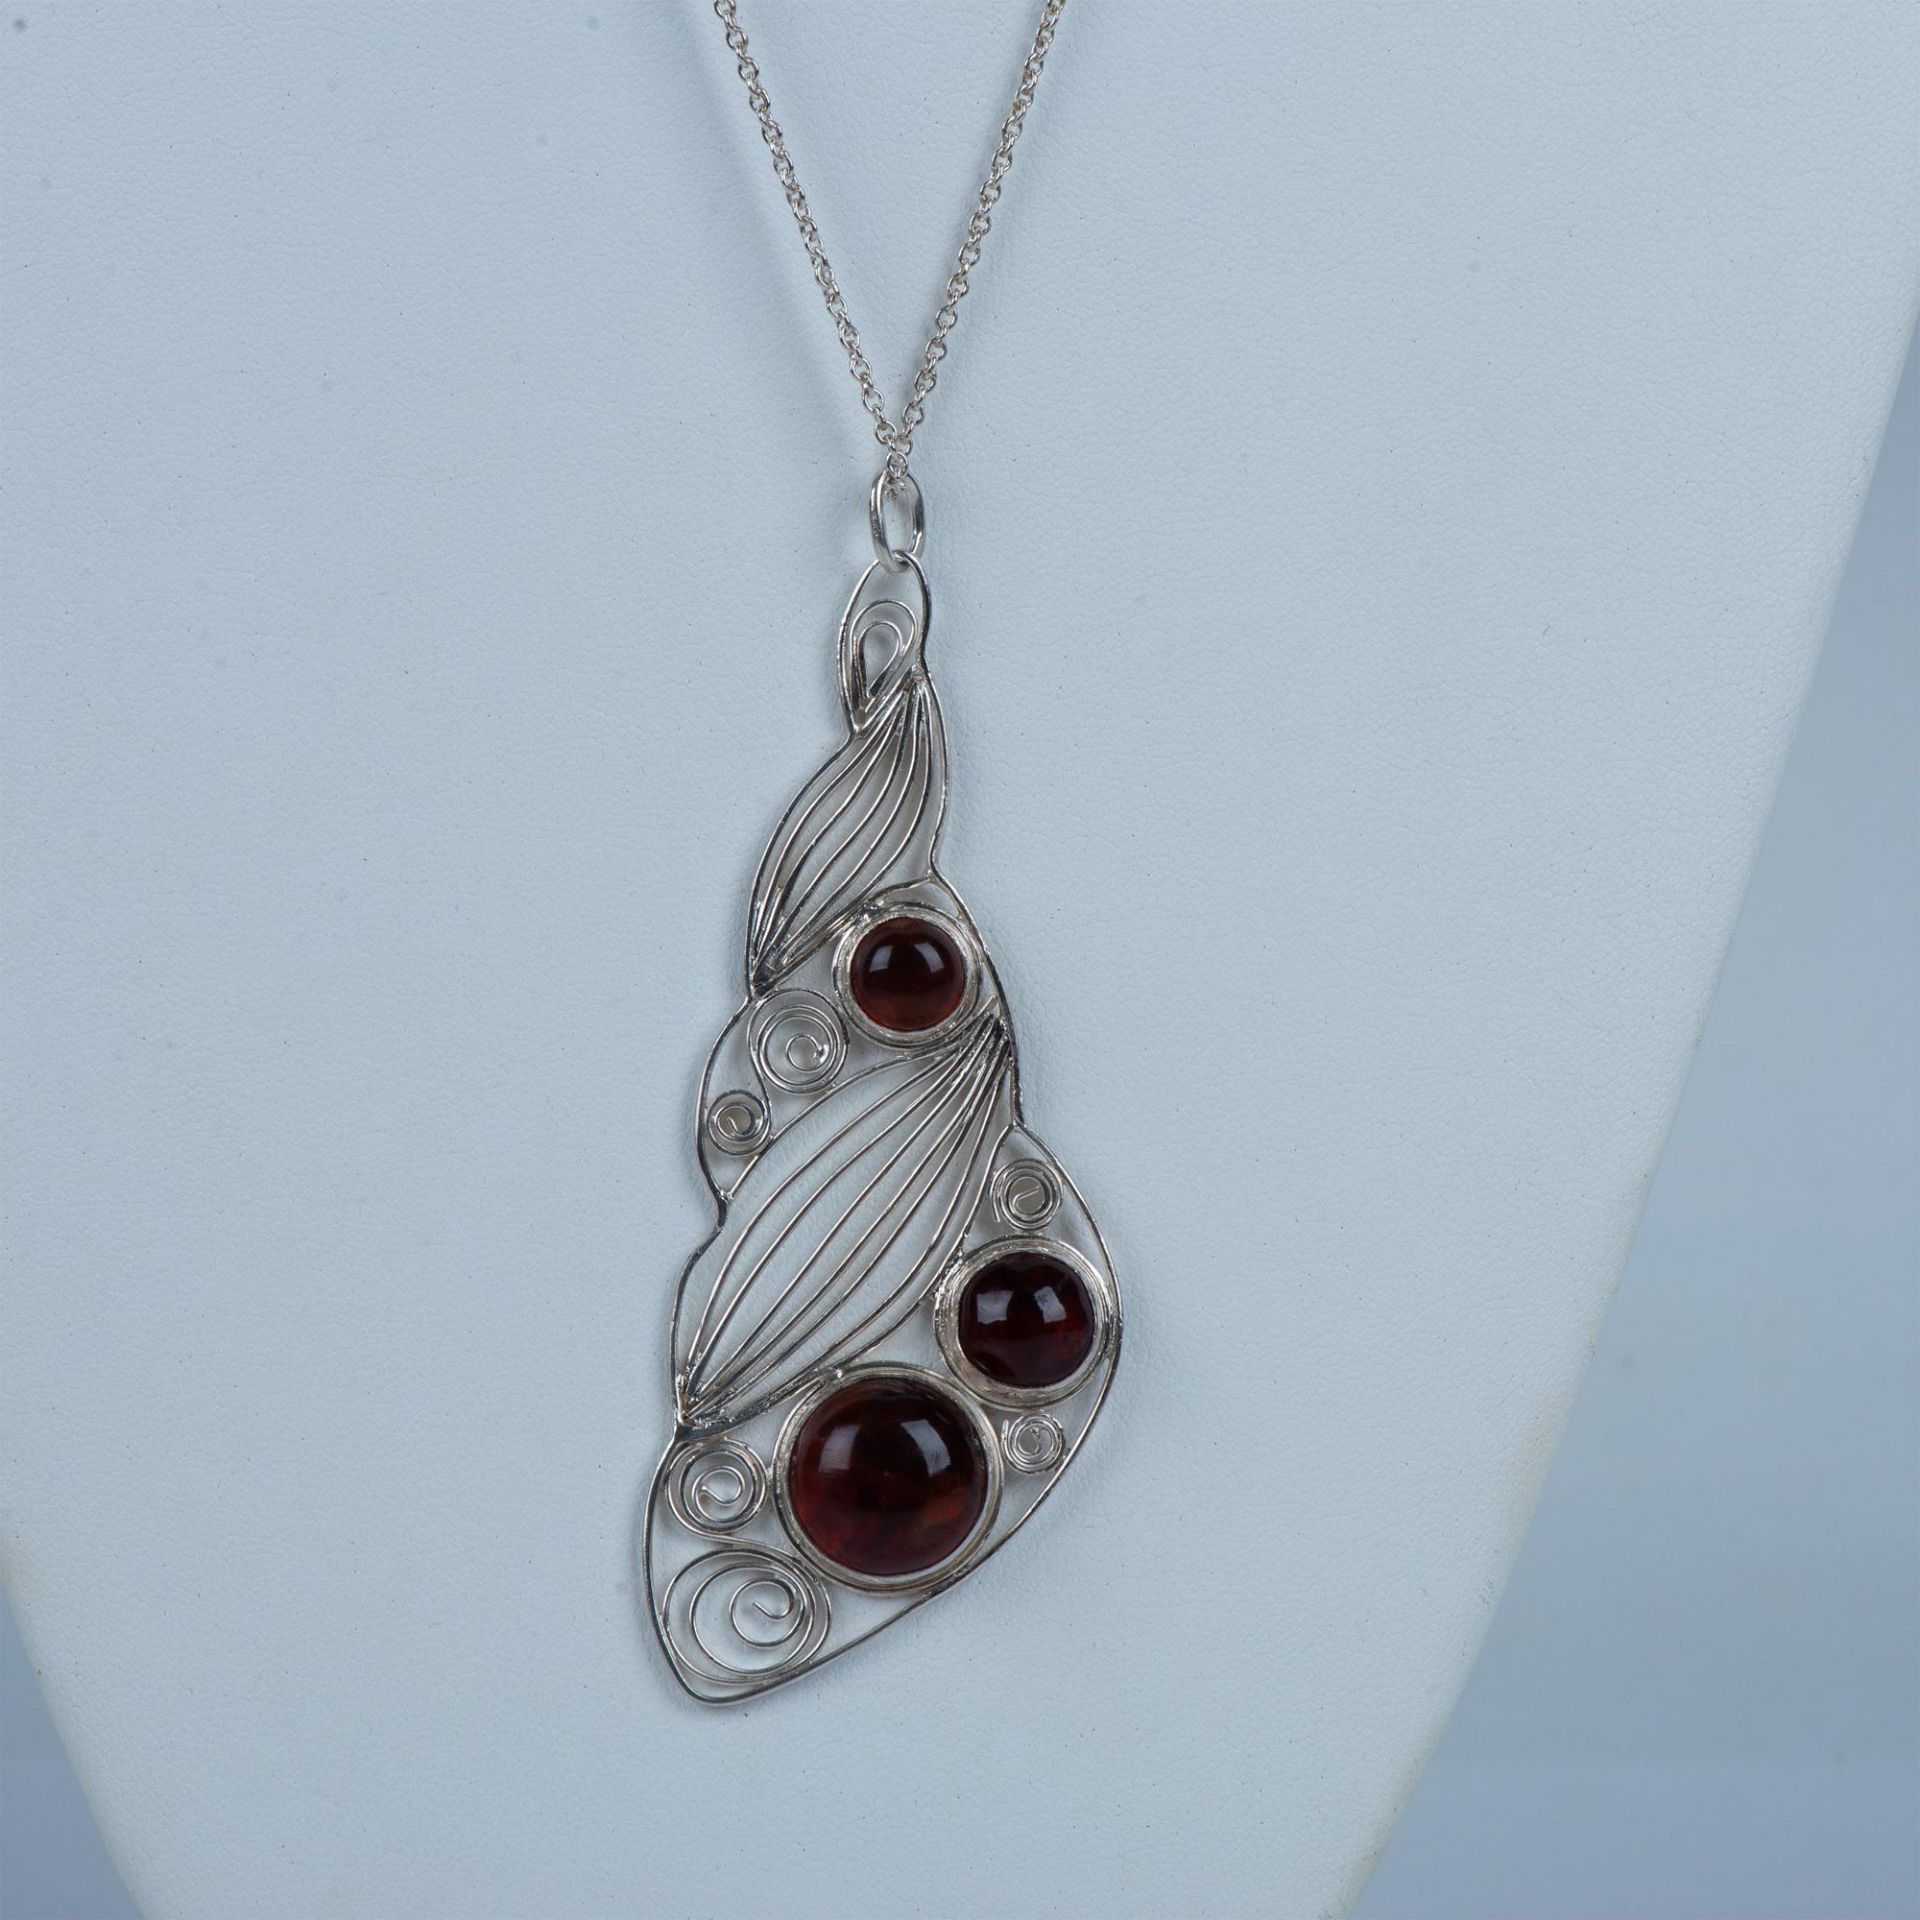 Art Nouveau Sterling Silver & Amber Pendant Necklace - Image 2 of 4